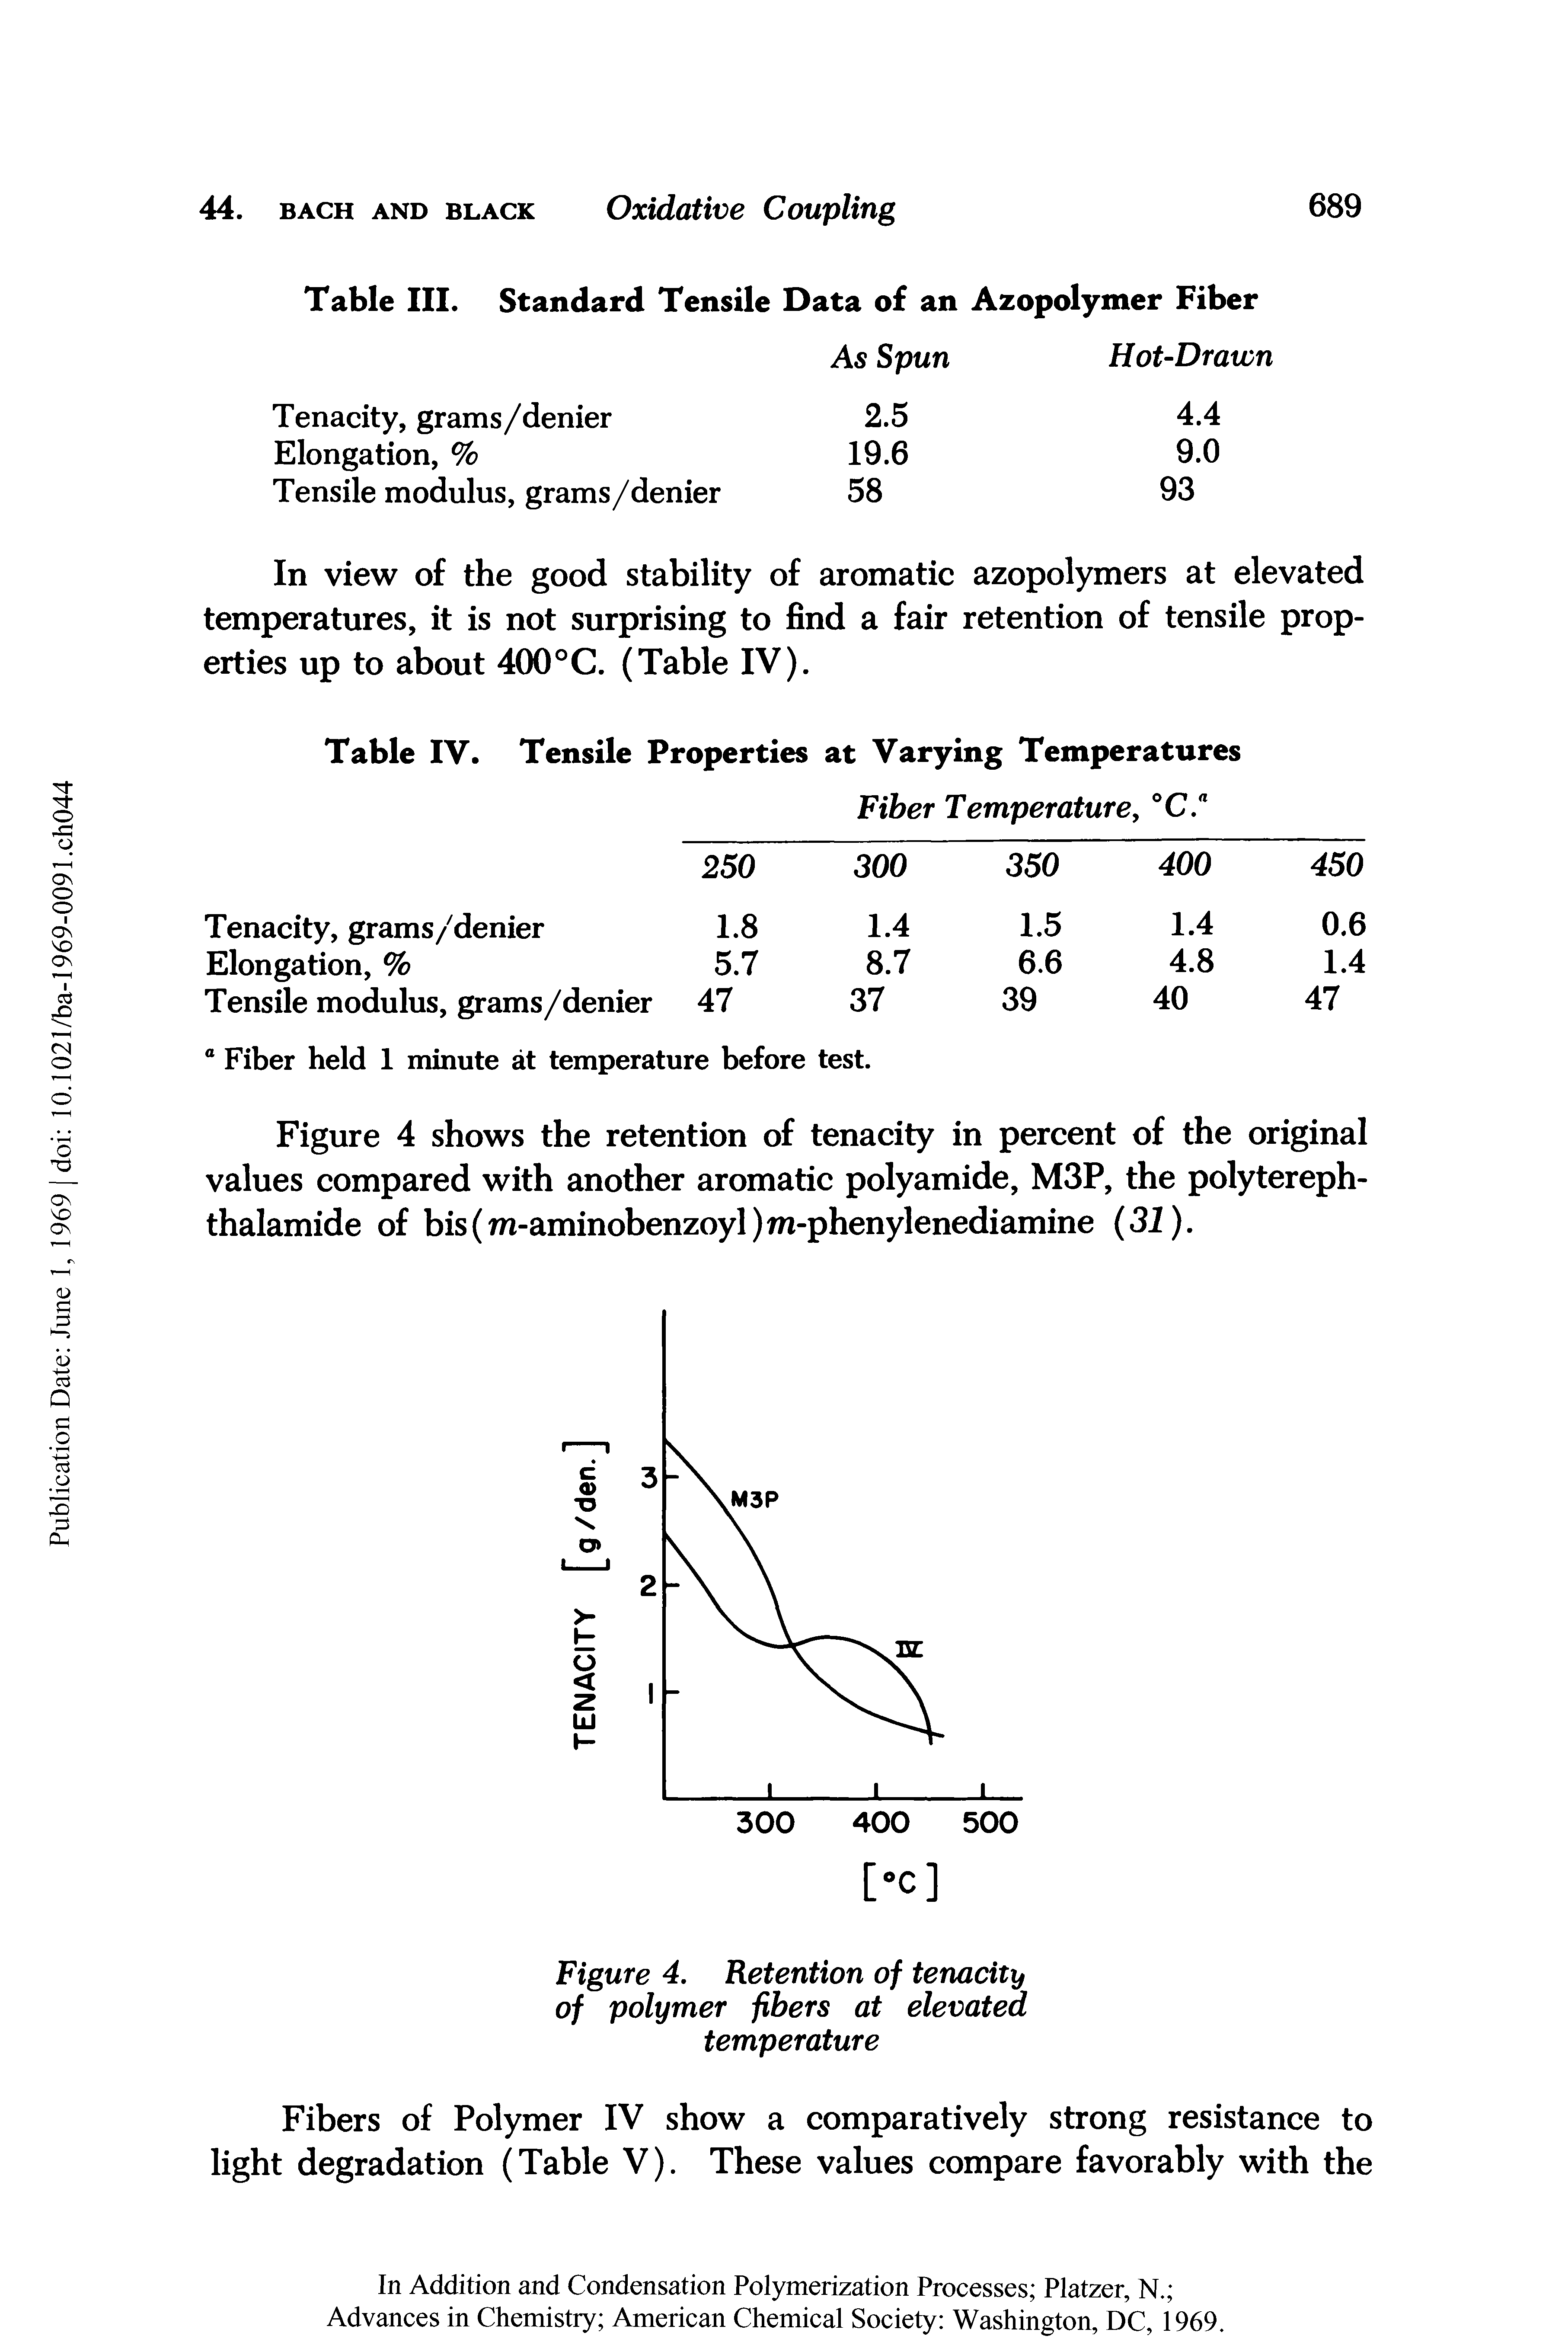 Table III. Standard Tensile Data of an Azopolymer Fiber...